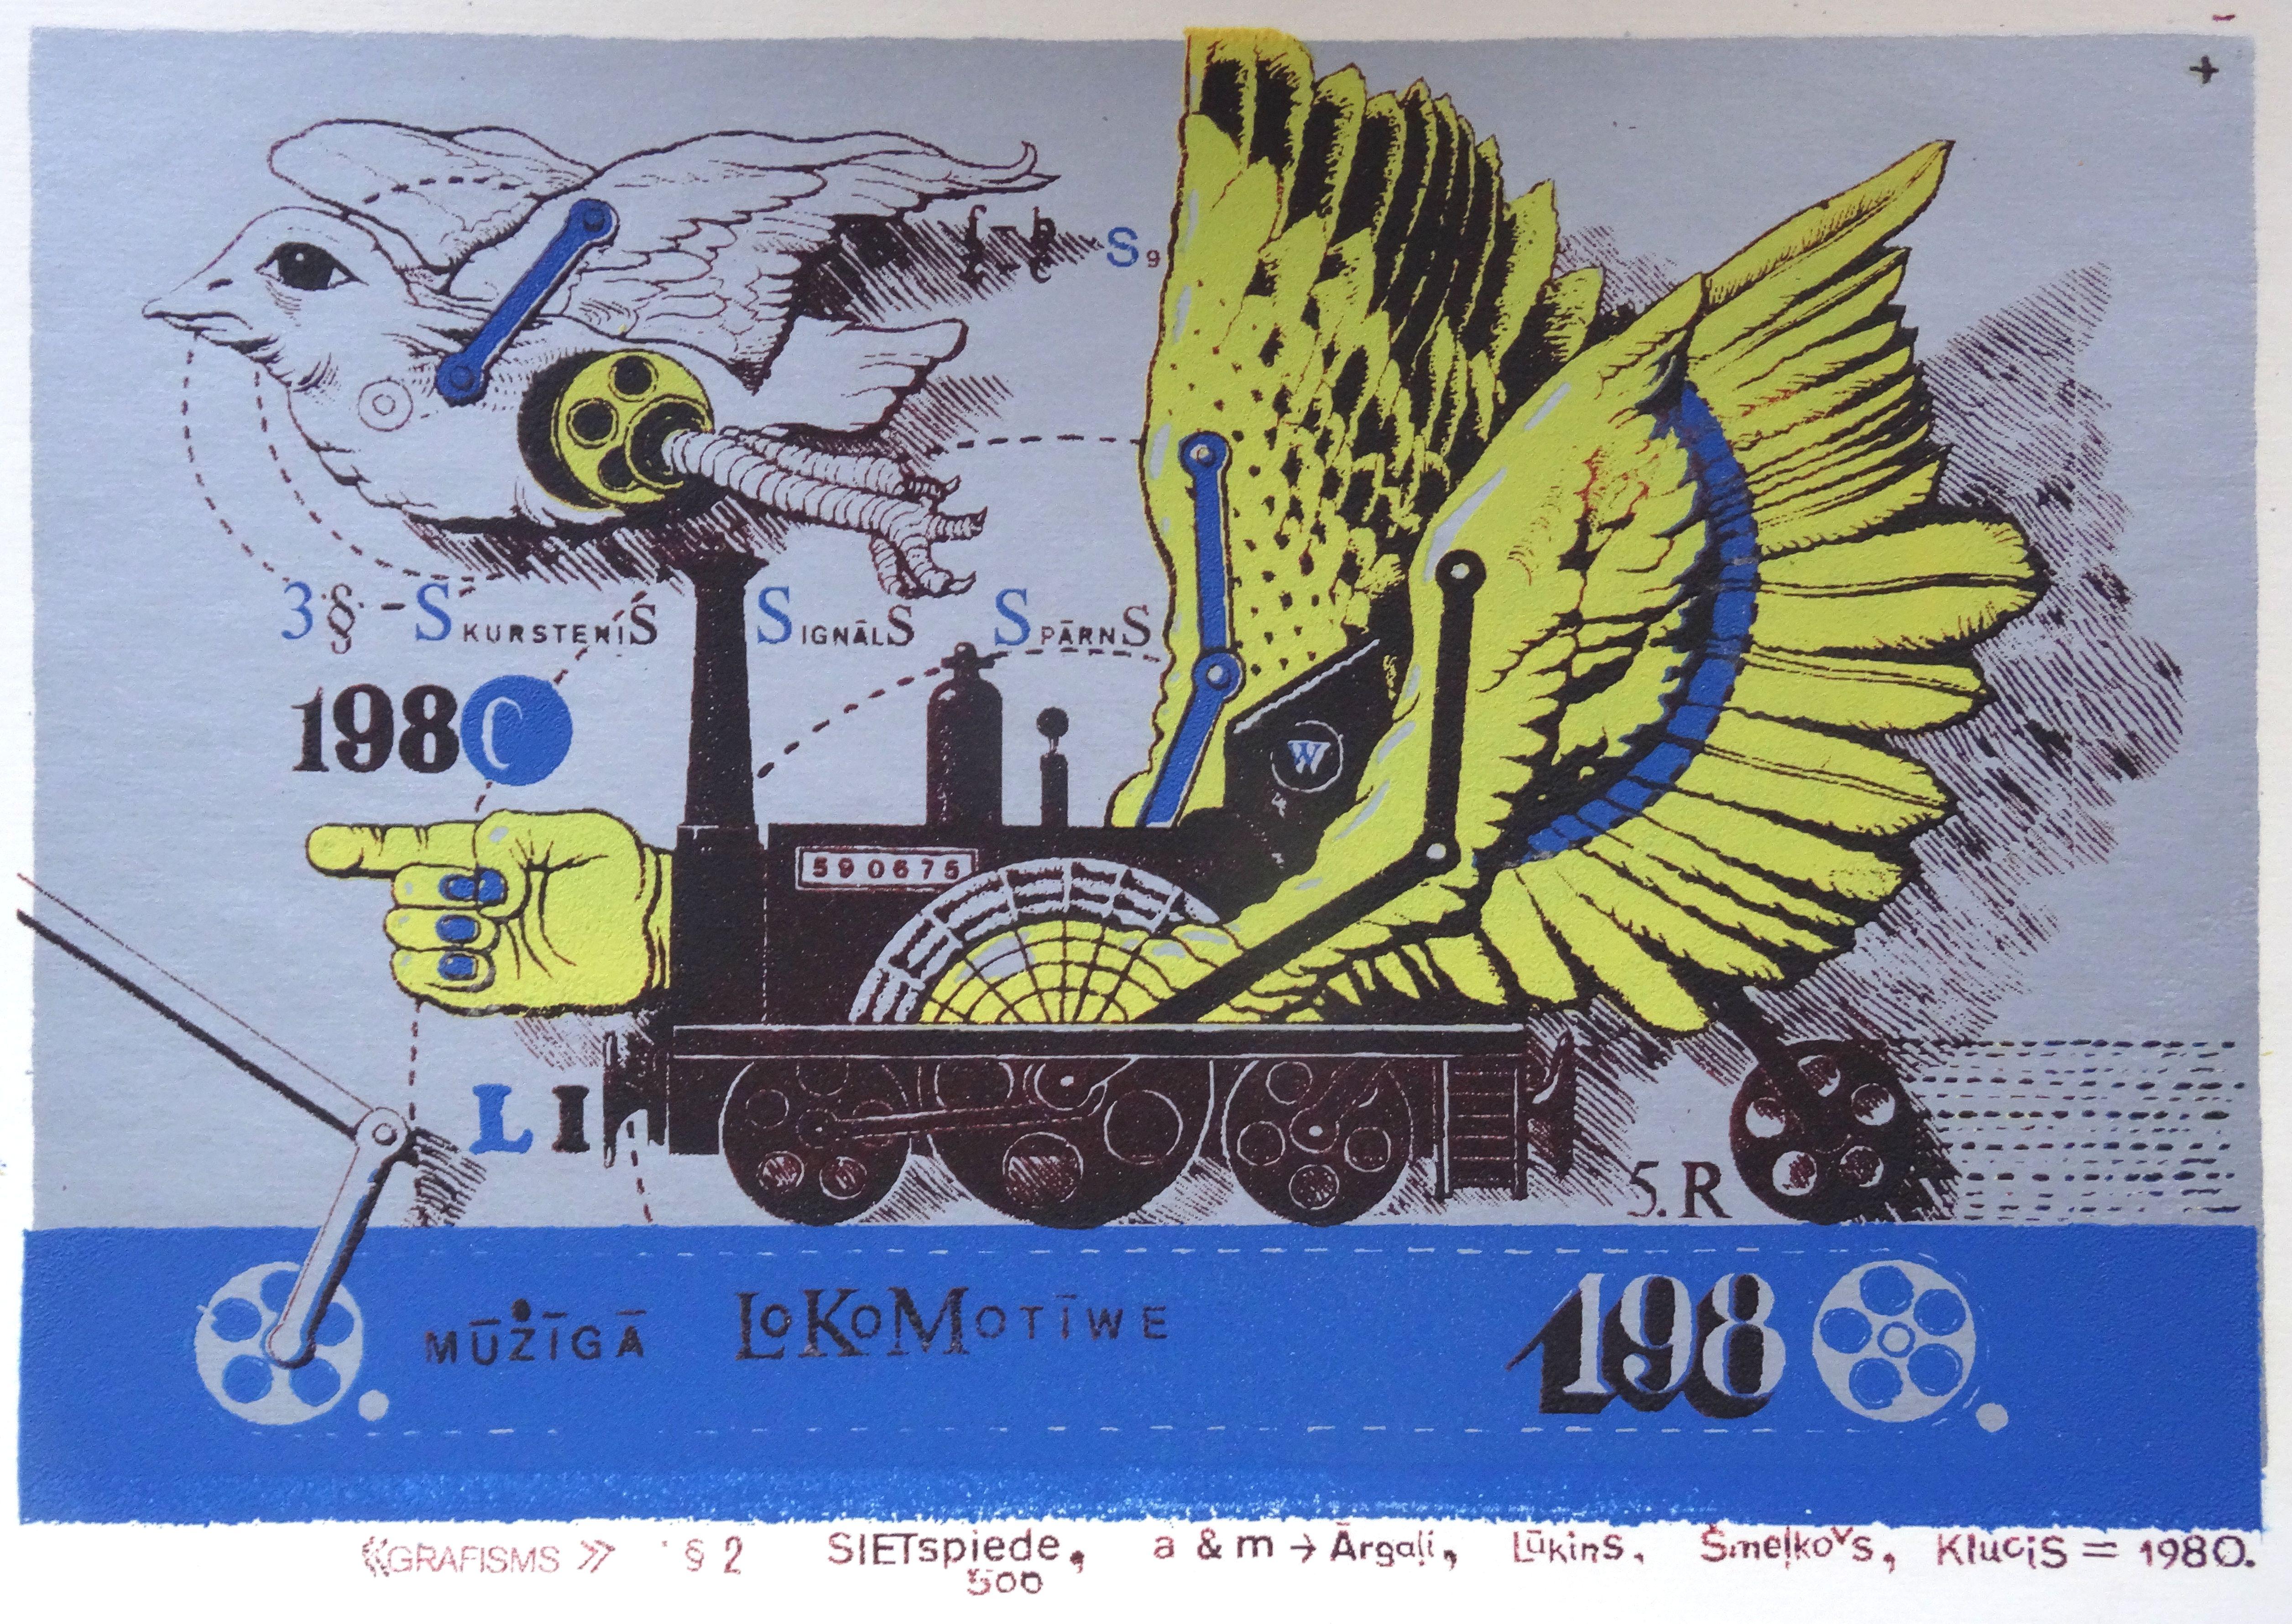 Maris Argalis Print - Graphisms & 2. 1980, paper, silk screen, 15x21 cm